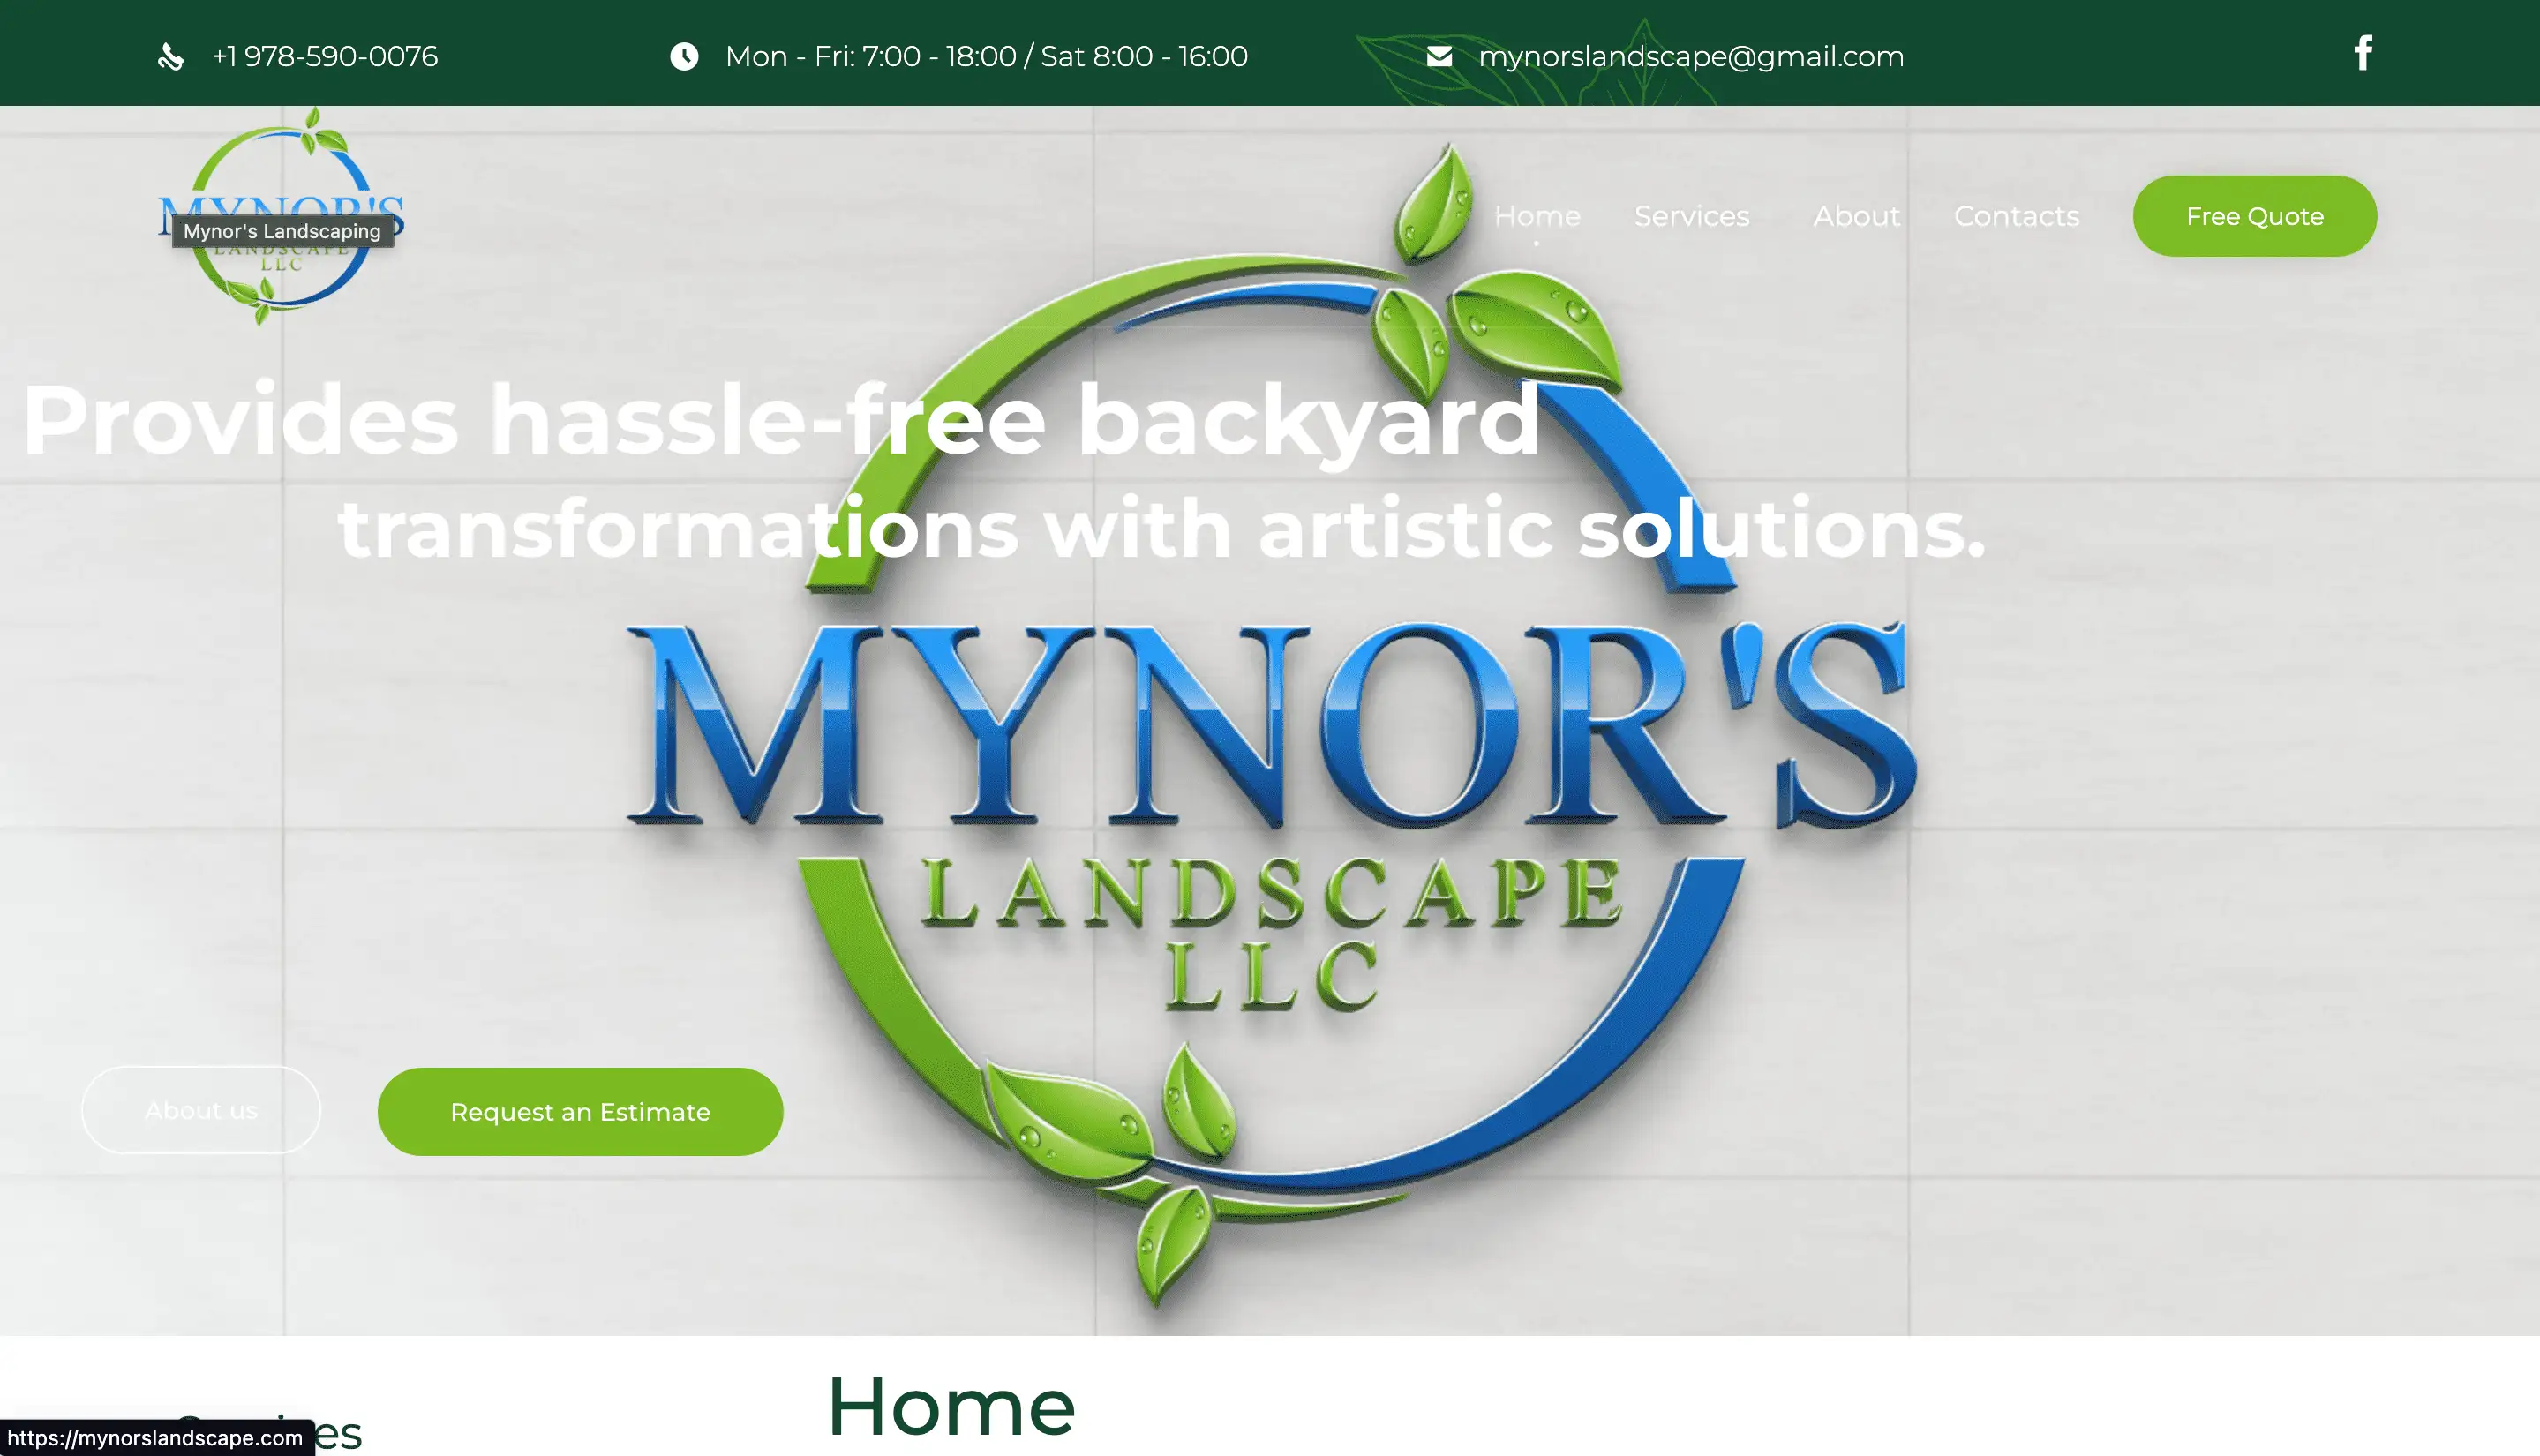 MYNOR'S LANDSCAPE LLC